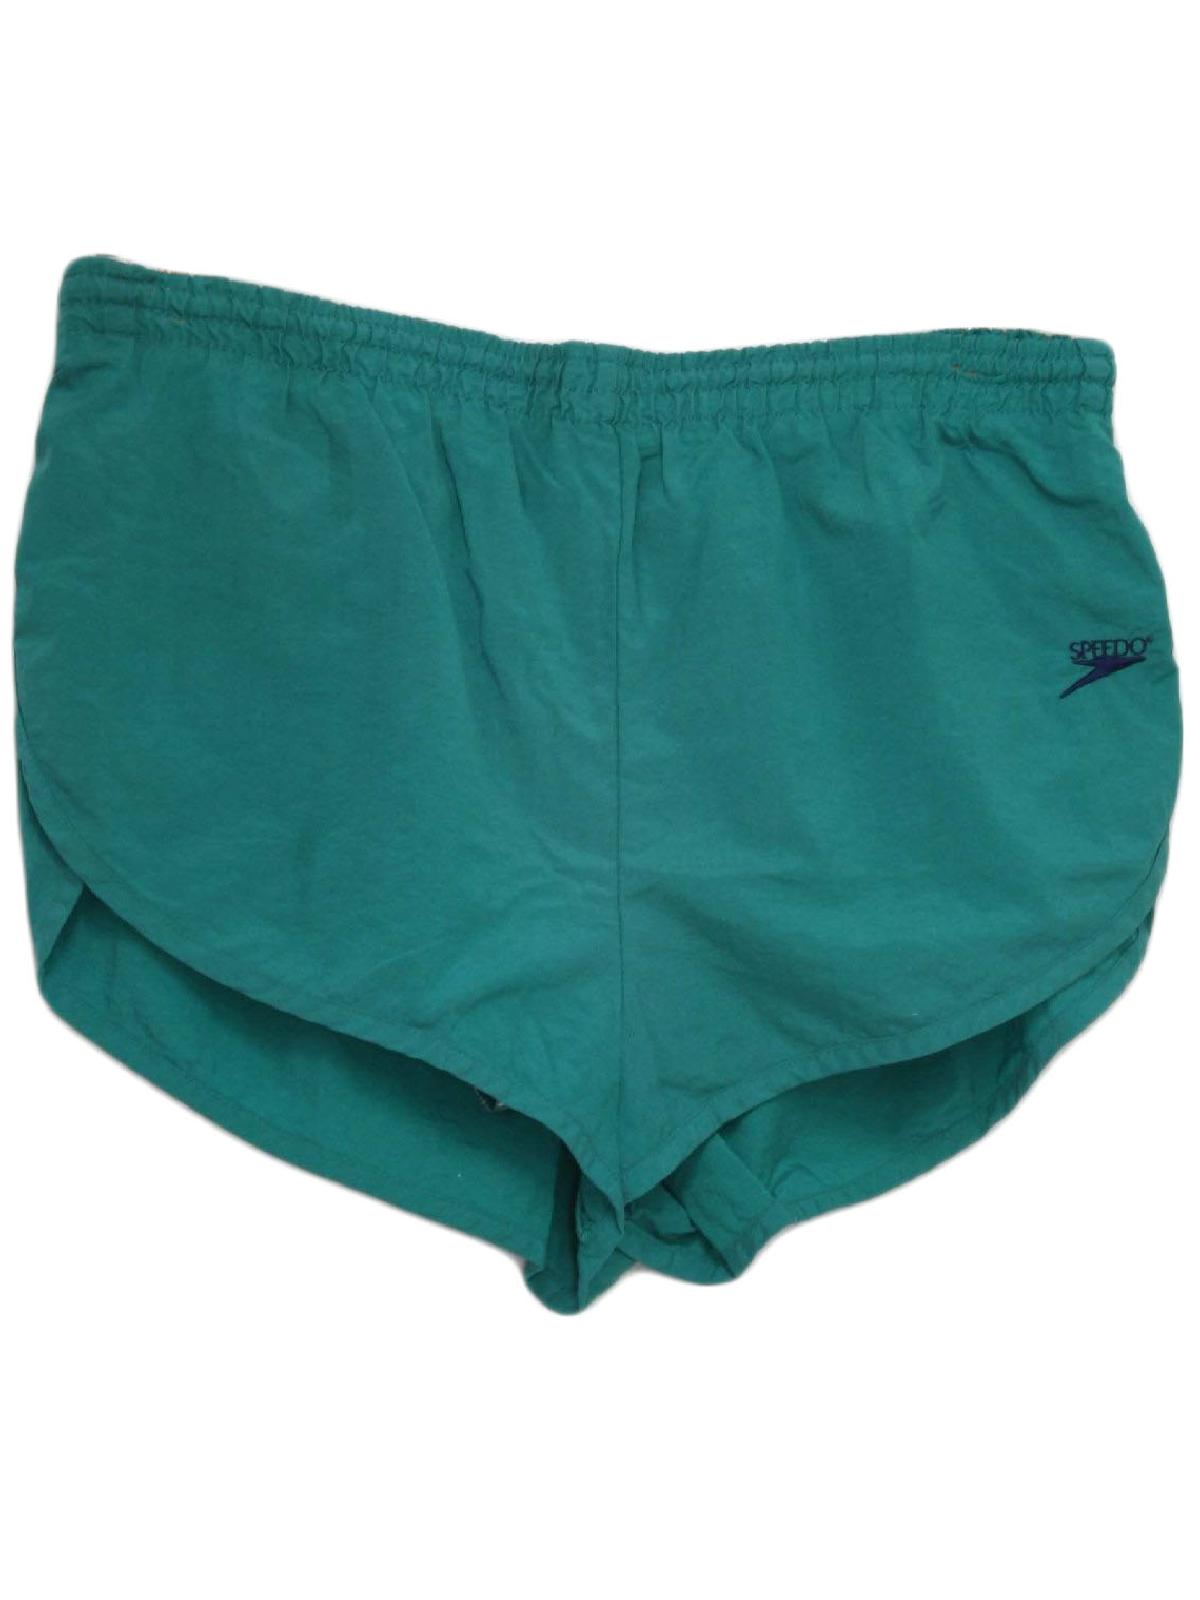 Retro Nineties Swimsuit/Swimwear: 90s -Speedo- Mens teal green nylon ...